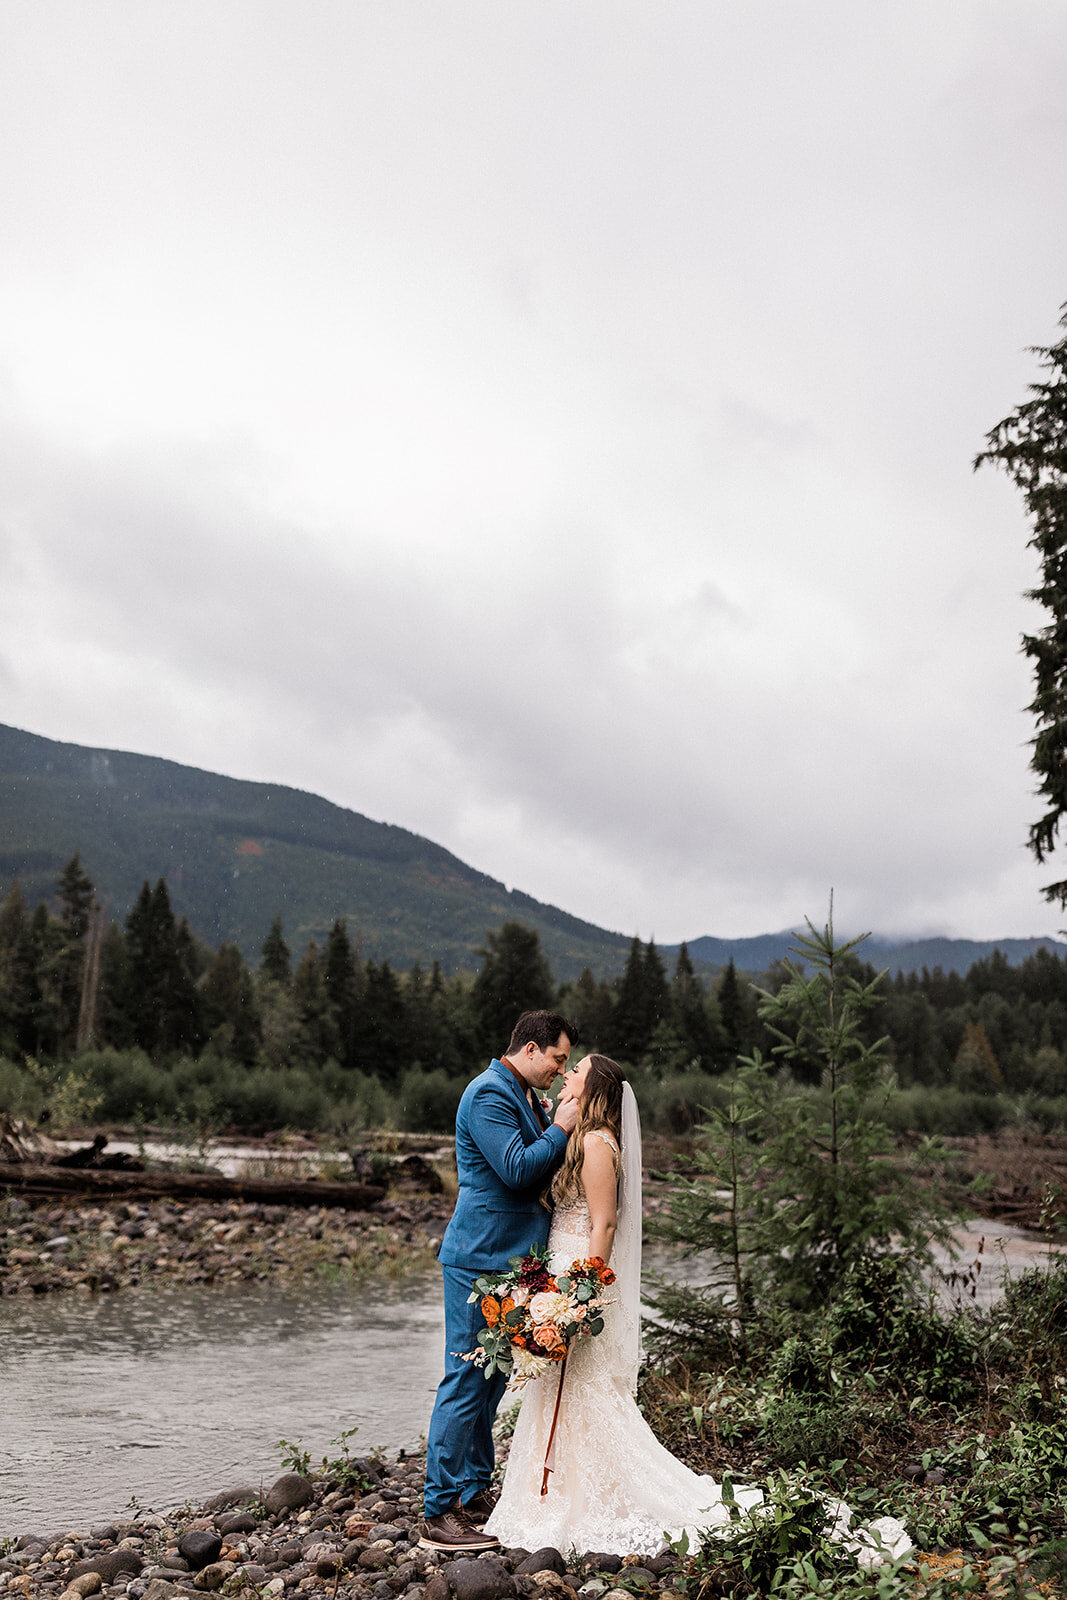 Rainy-Mount-Rainier-National-Park-Intimate-Wedding-69